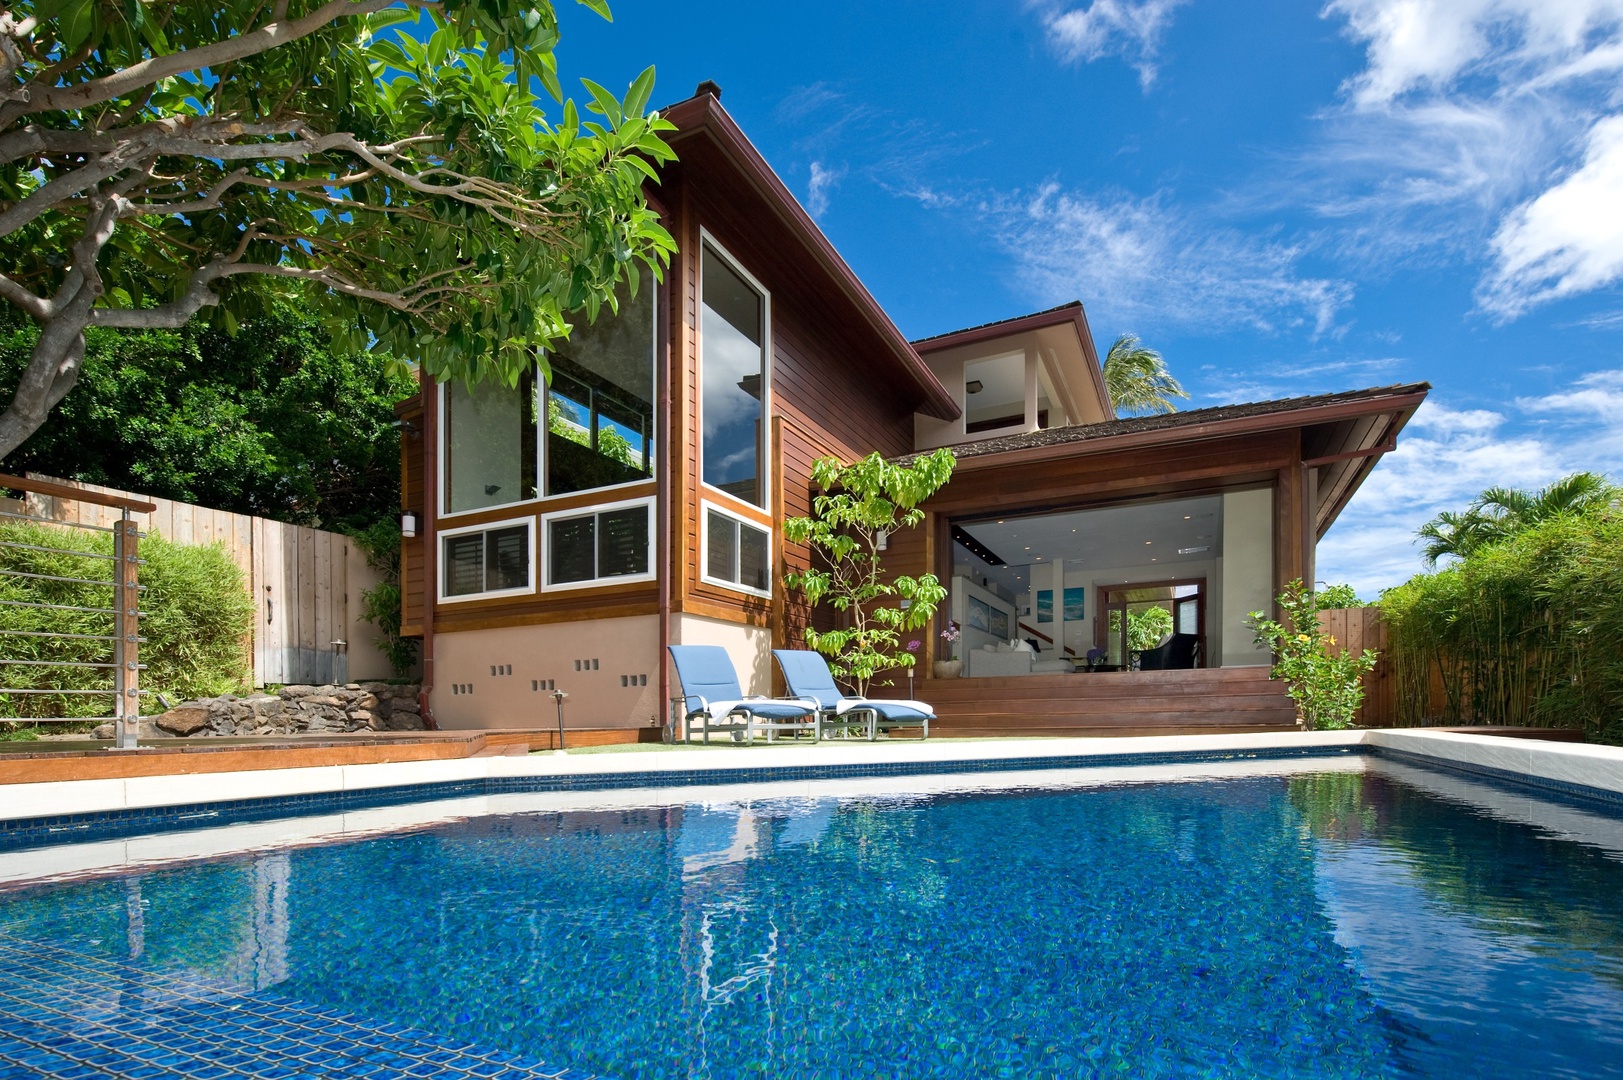 Honolulu Vacation Rentals, Casa de Makalei - Backyard with heated swimming pool